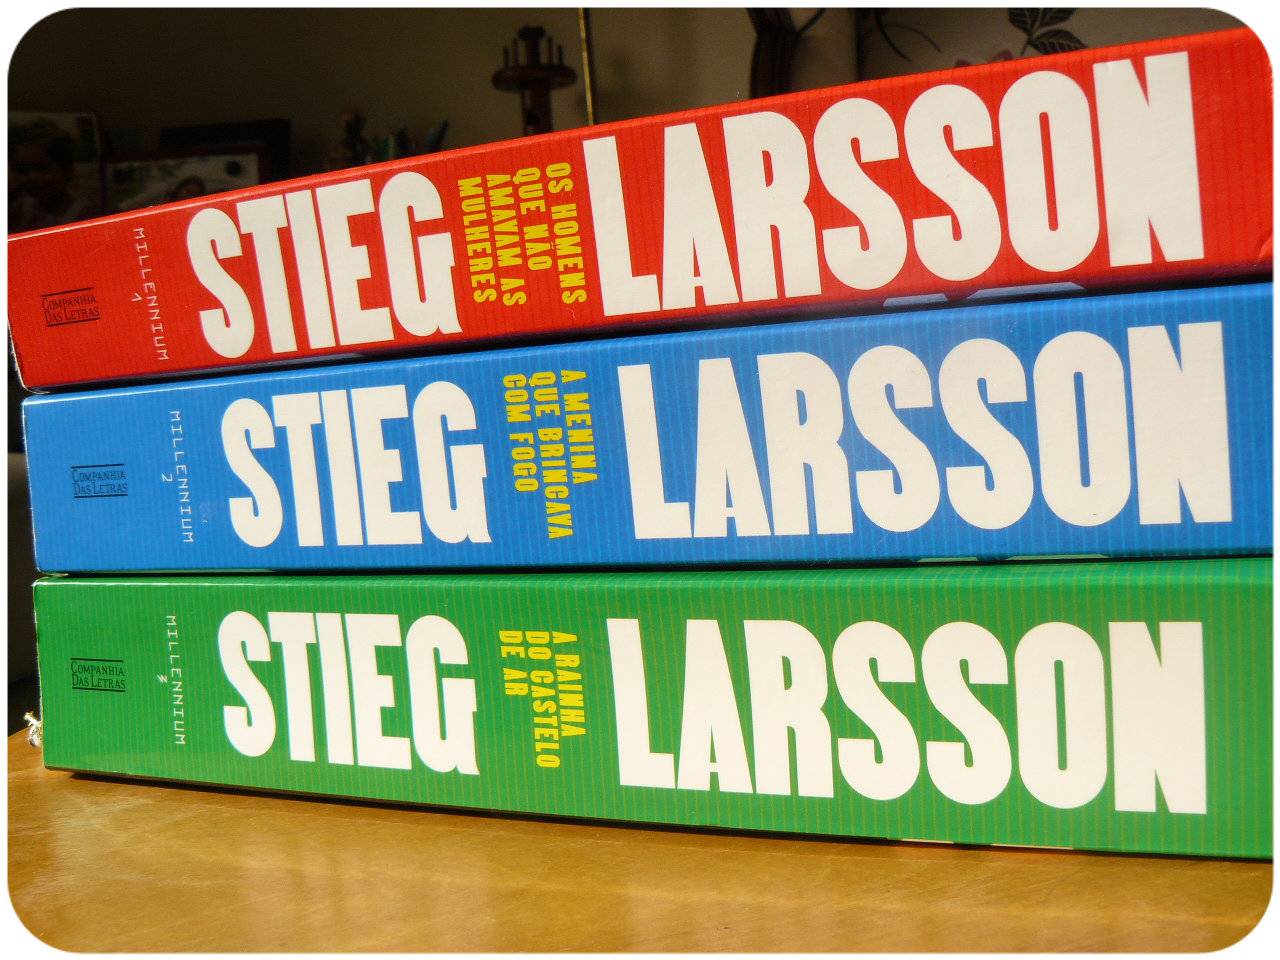 Viúva de Stieg Larsson quer concluir livro da série “Millenium”